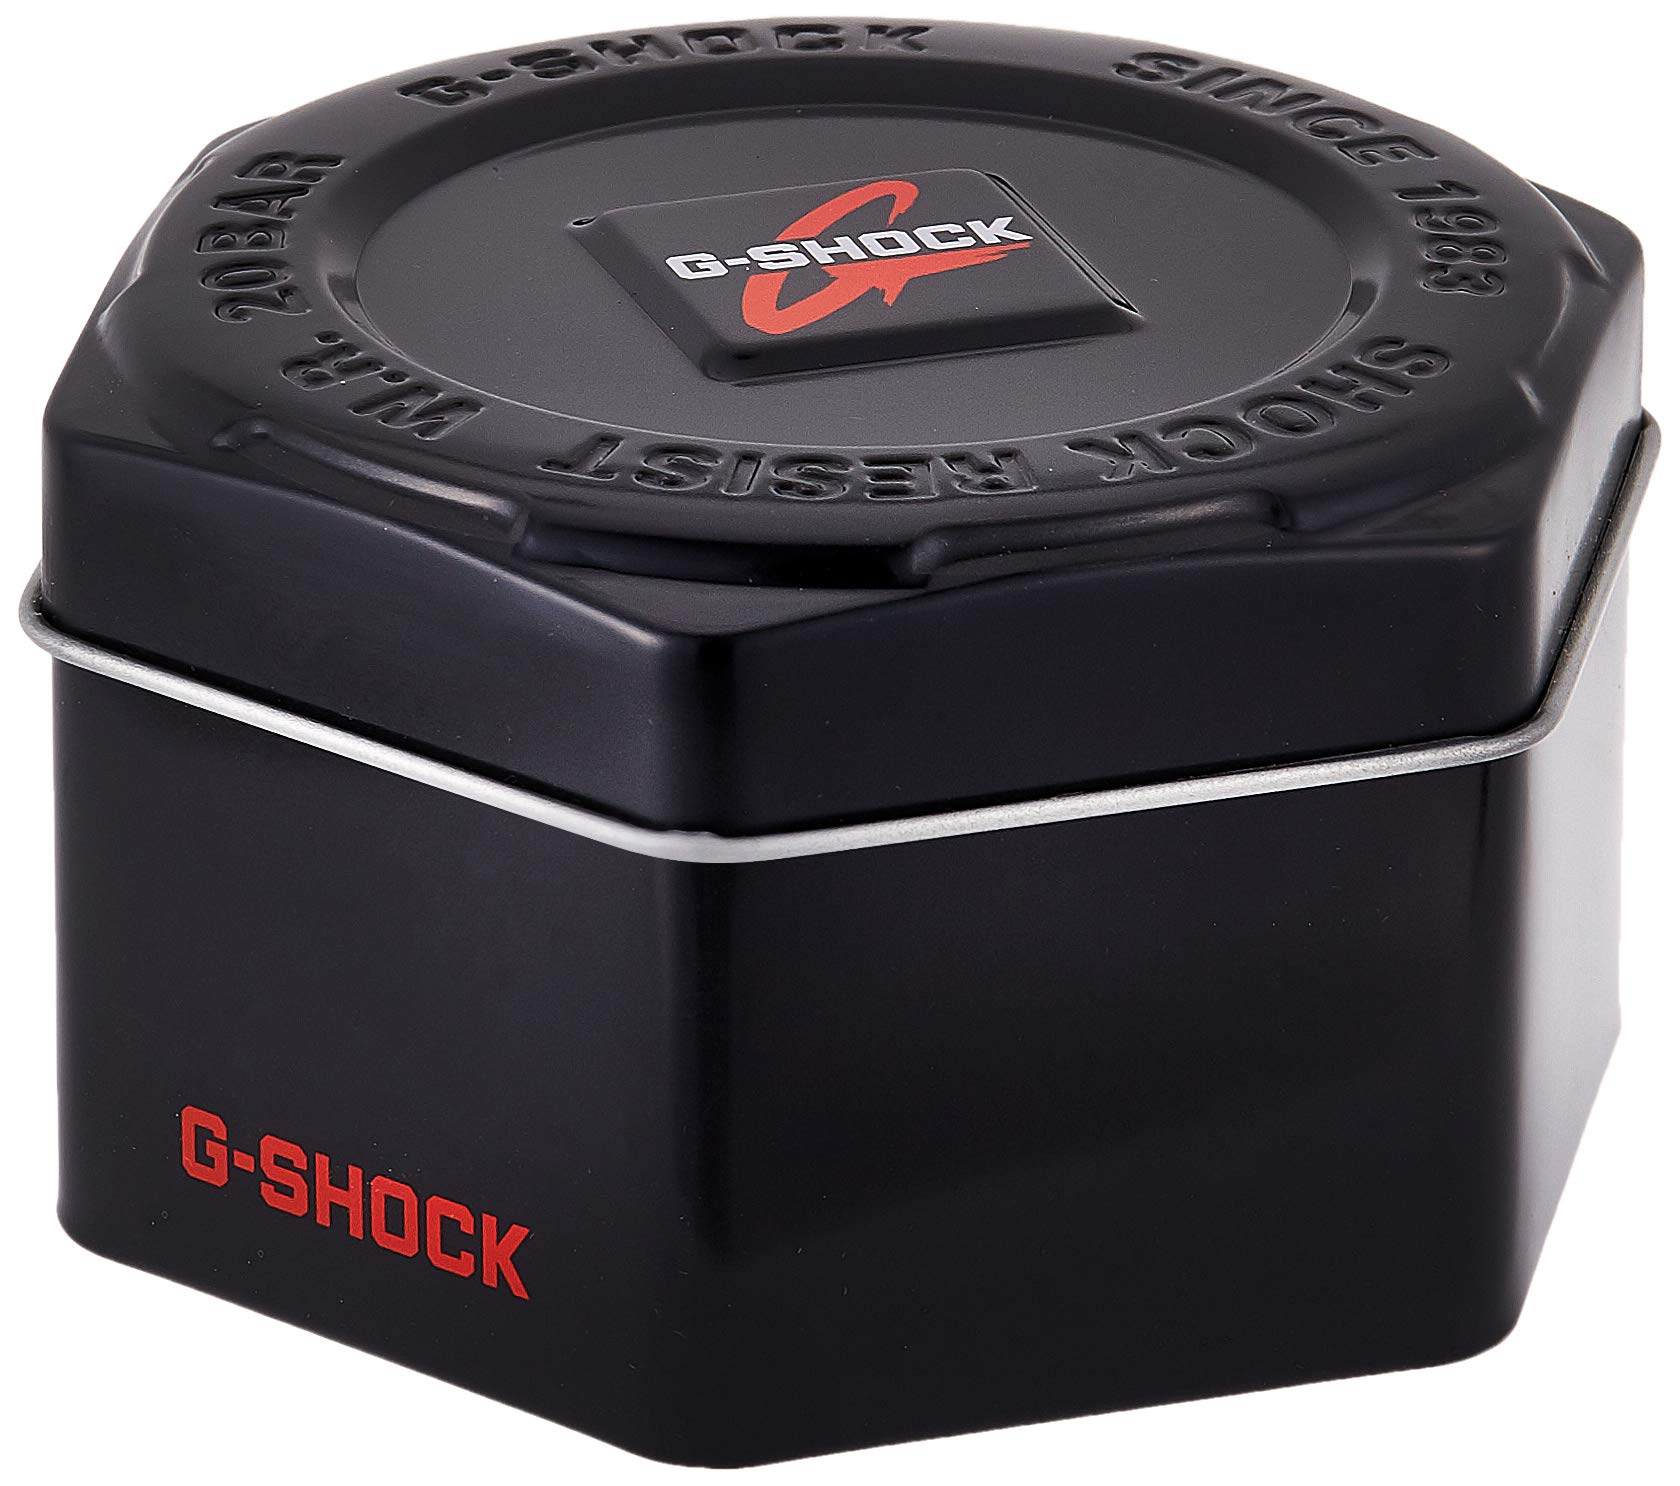 Casio G-Shock Graphic Dial Resin Quartz Men's Watch GA100CB-1A